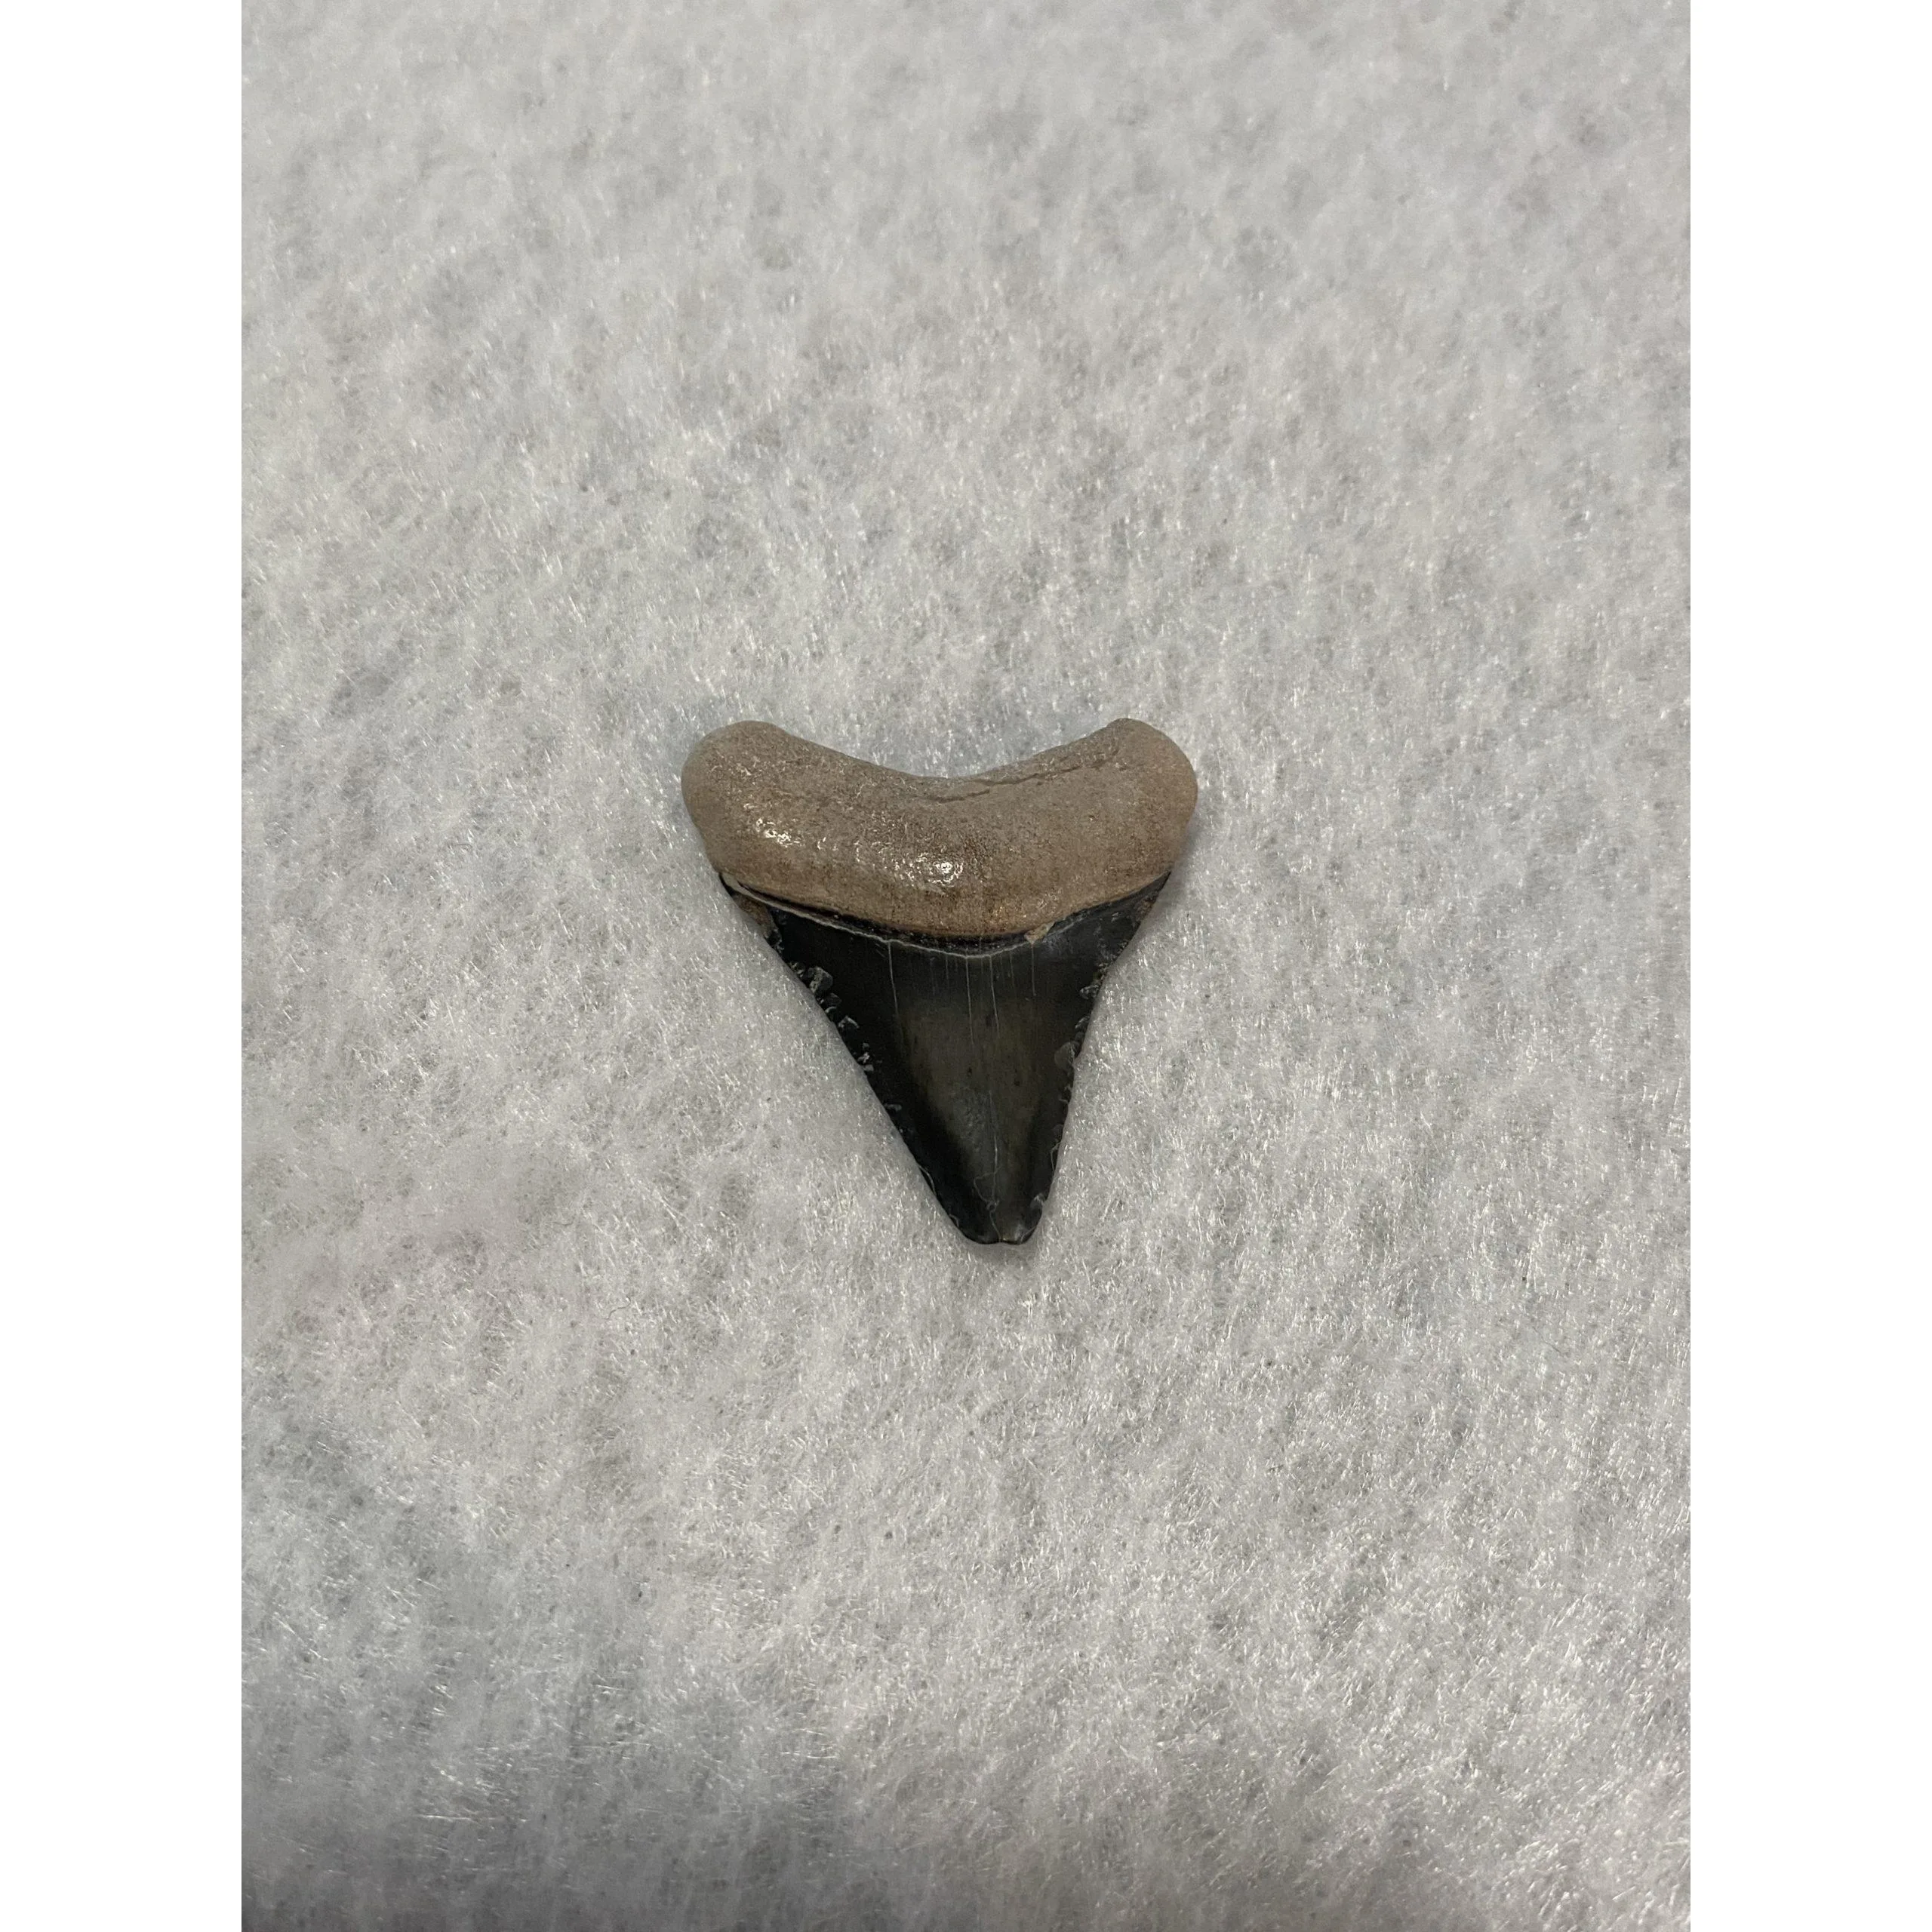 Megalodon Tooth, Bone Valley, Florida, 1.30 inch Prehistoric Online